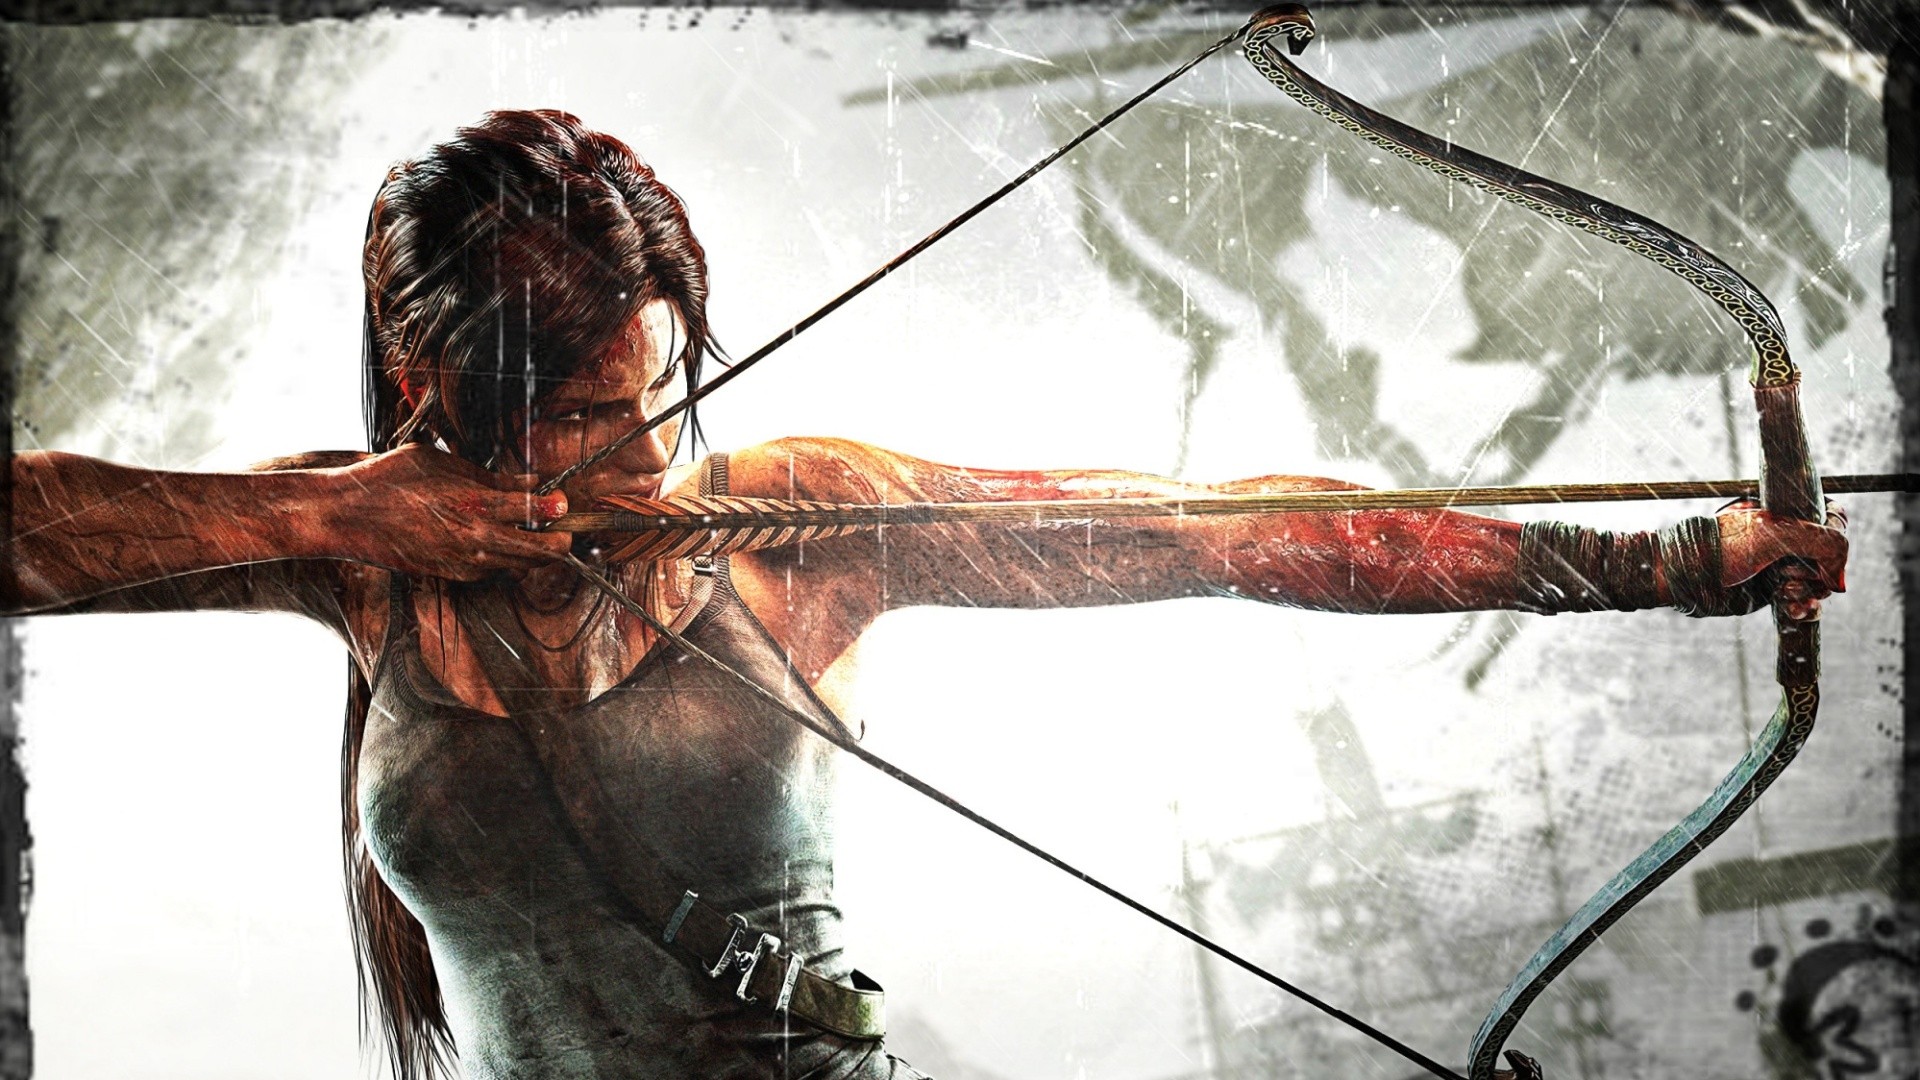 General 1920x1080 video games Tomb Raider video game art video game girls bow aiming weapon Lara Croft (Tomb Raider) bow and arrow video game characters